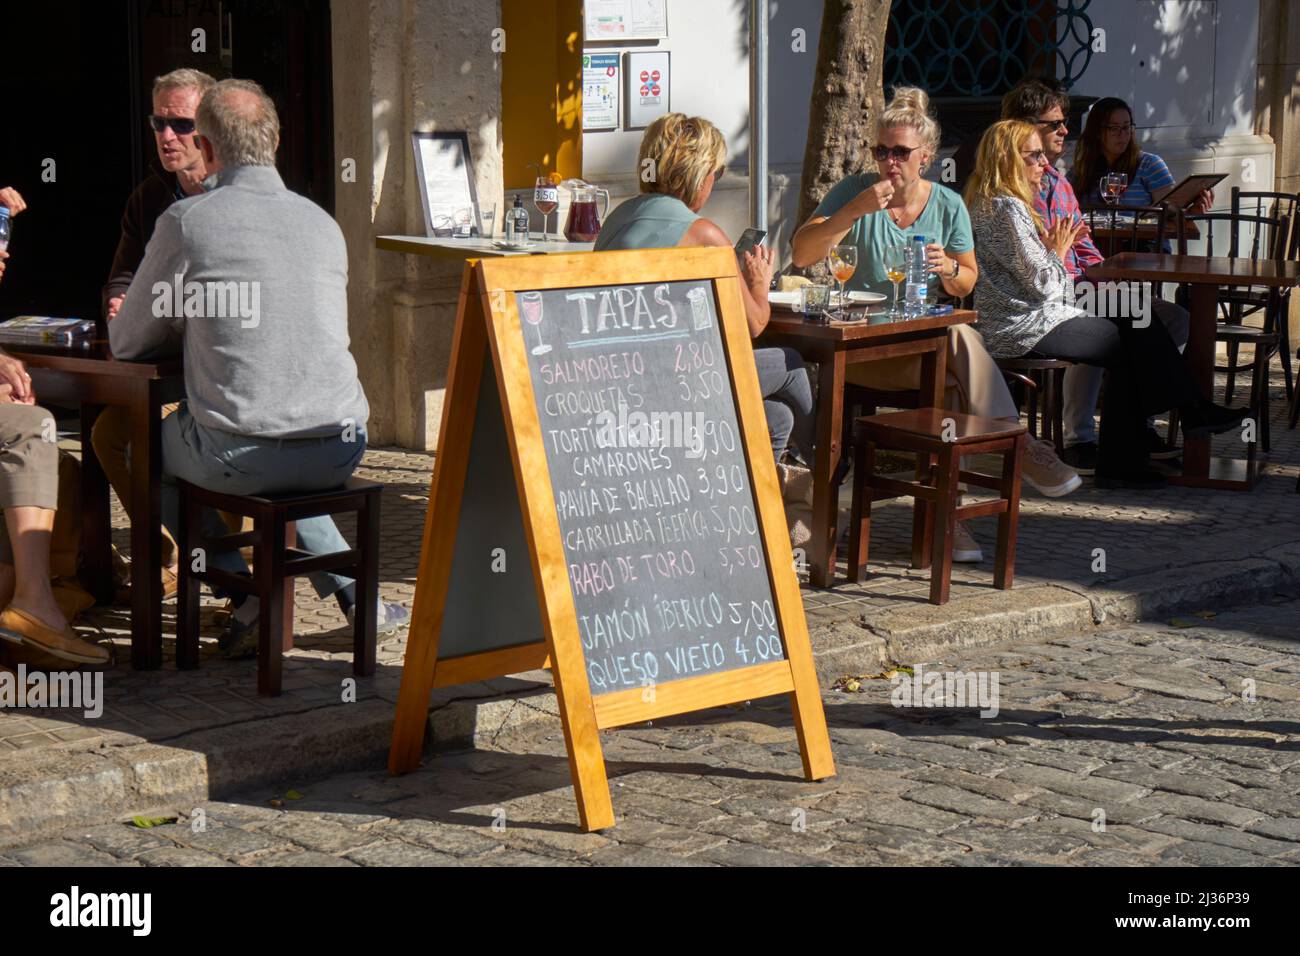 Al fresco tapas bar in sunshine with tourists and large tapas menu, Seville, Spain Stock Photo